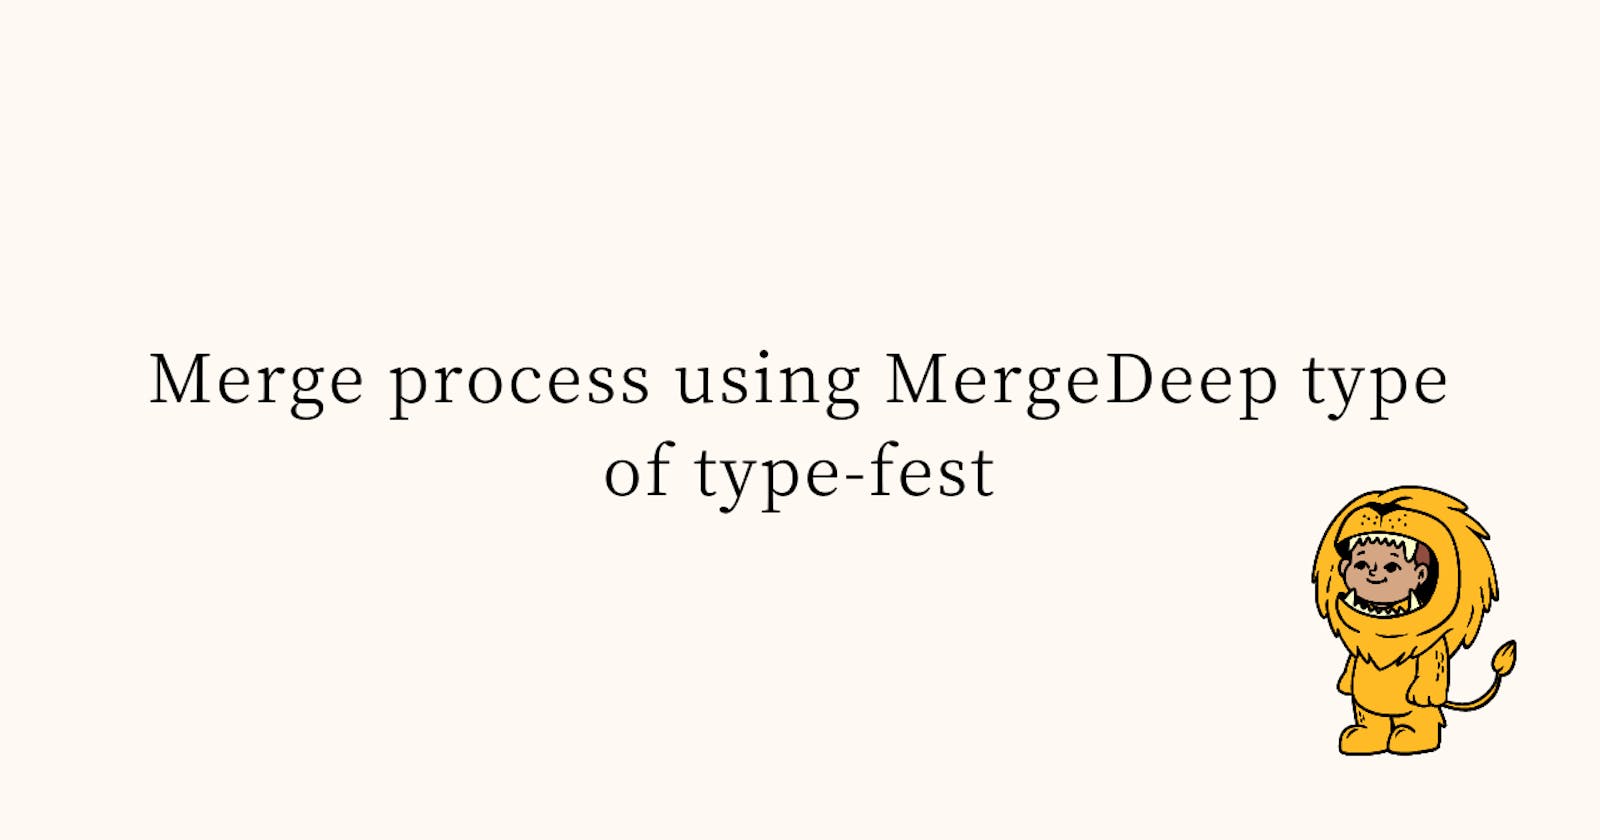 Merge process using MergeDeep type of type-fest